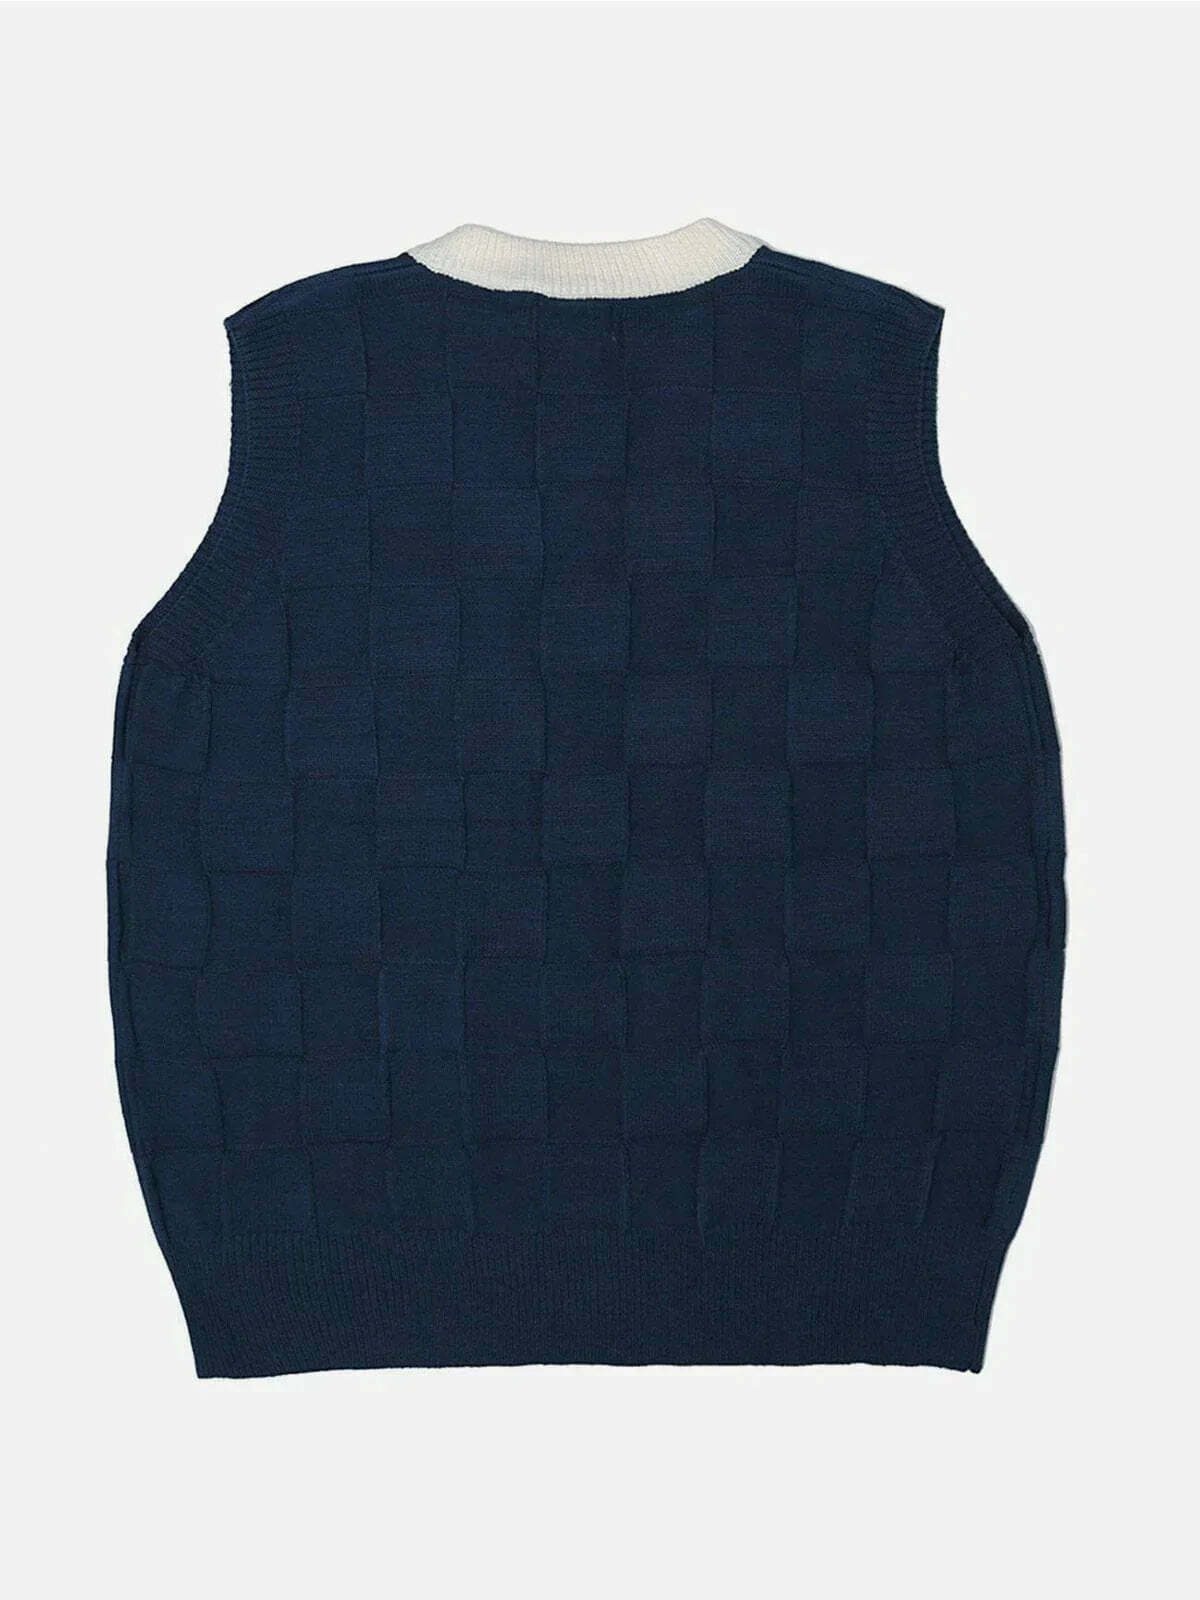 lattice sweater vest retro streetwear essential 2357